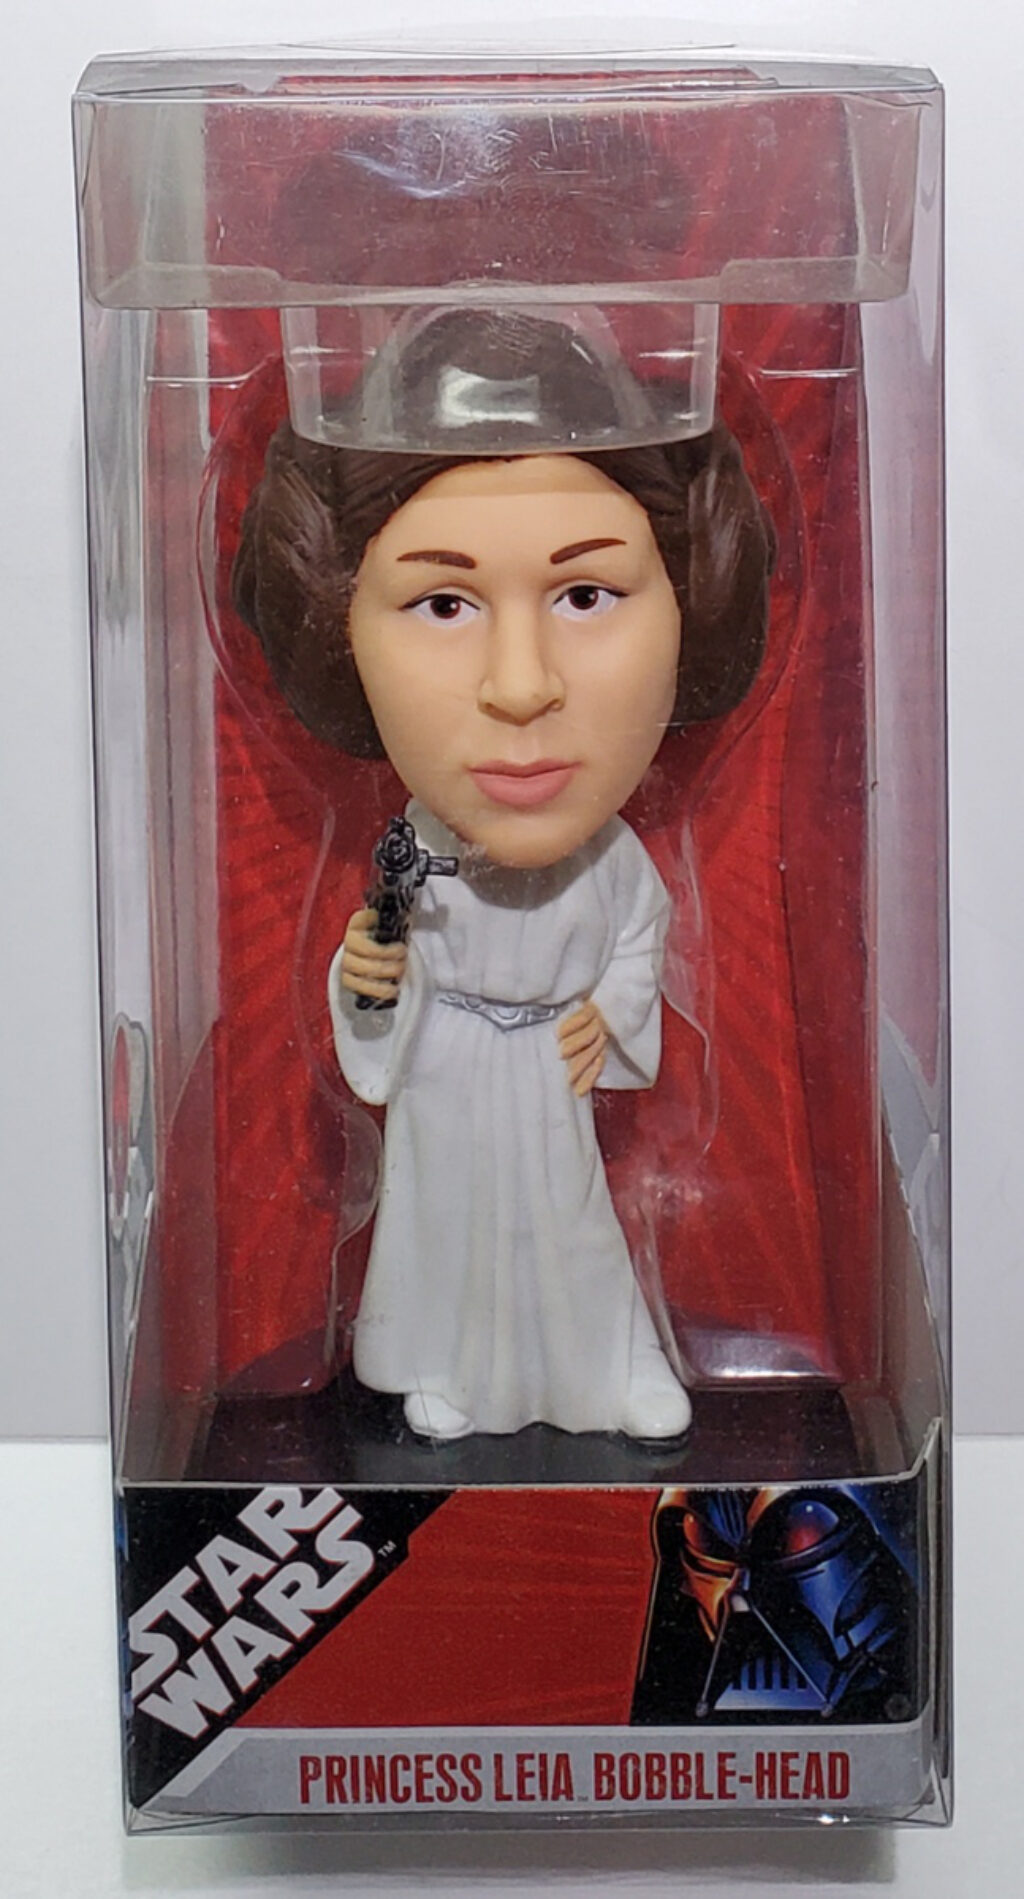 Star Wars Princess Leia Bobble-Head from Funko 1